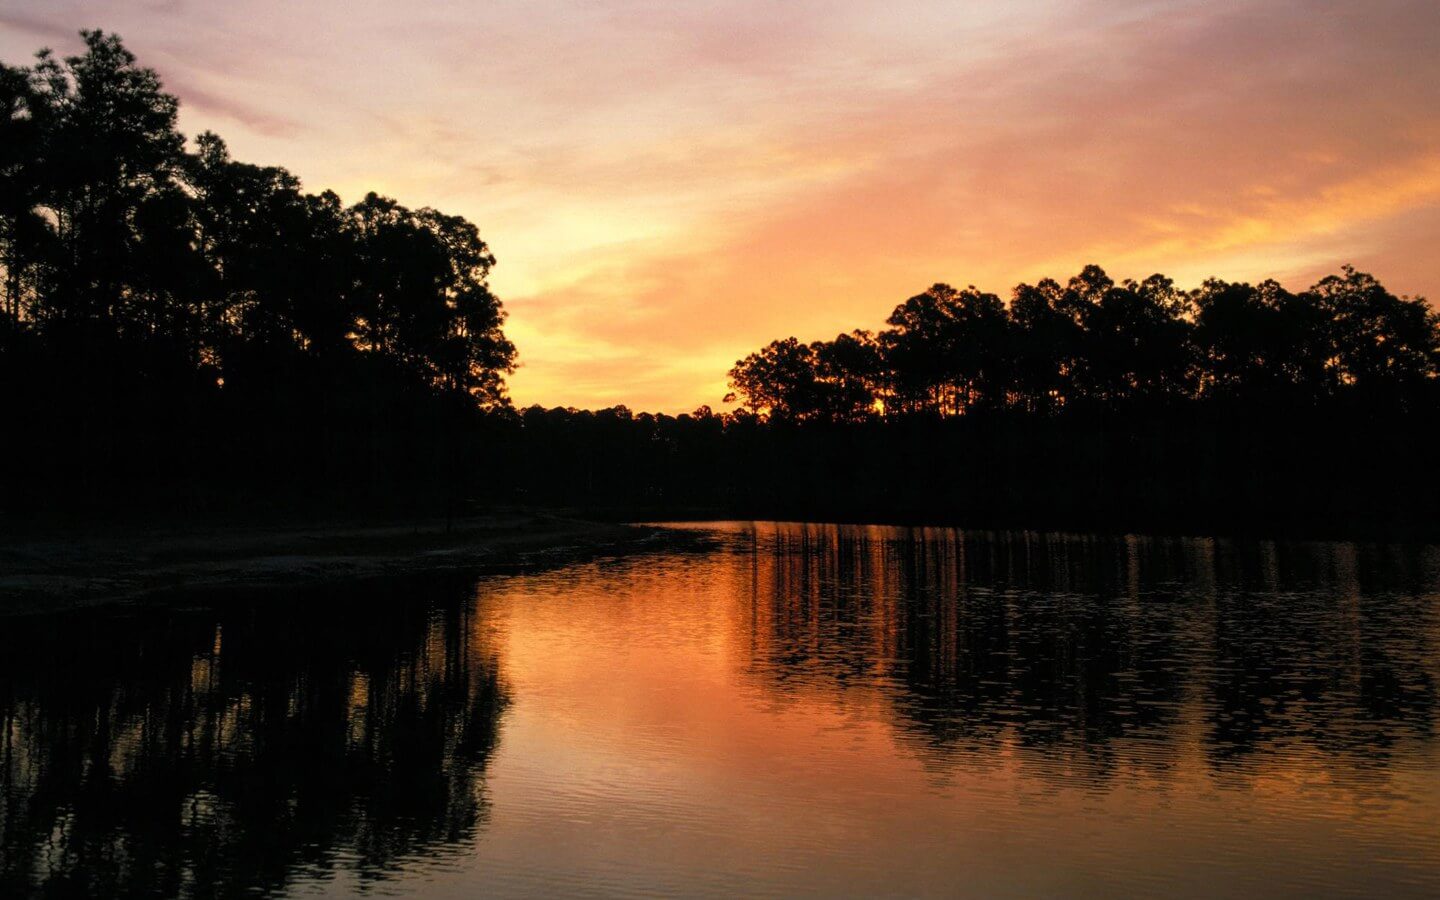 Sunset over Maiden Erlegh lake